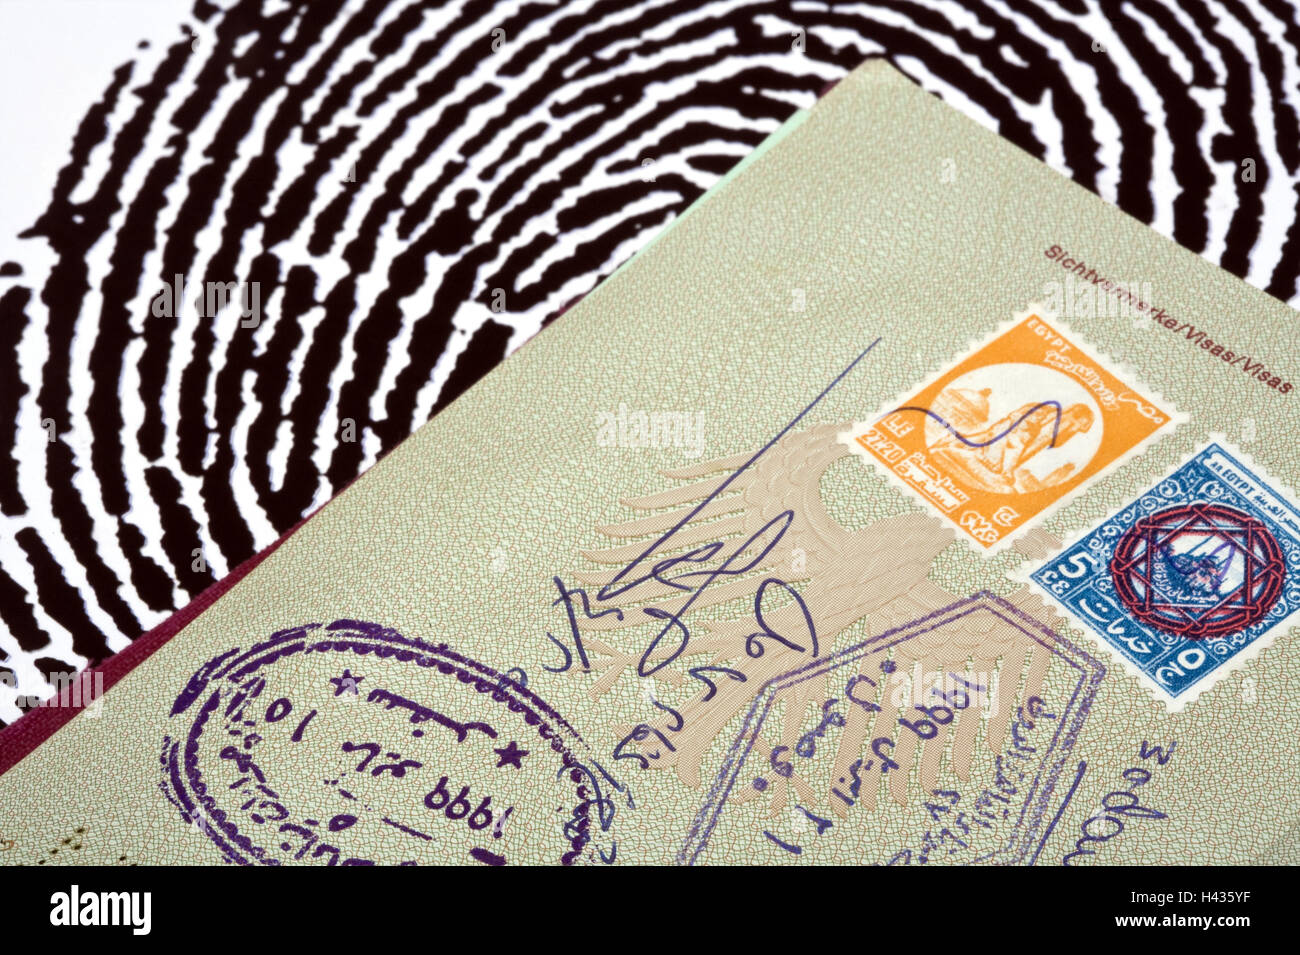 Fingerprint, passport, visa, detail, Stock Photo